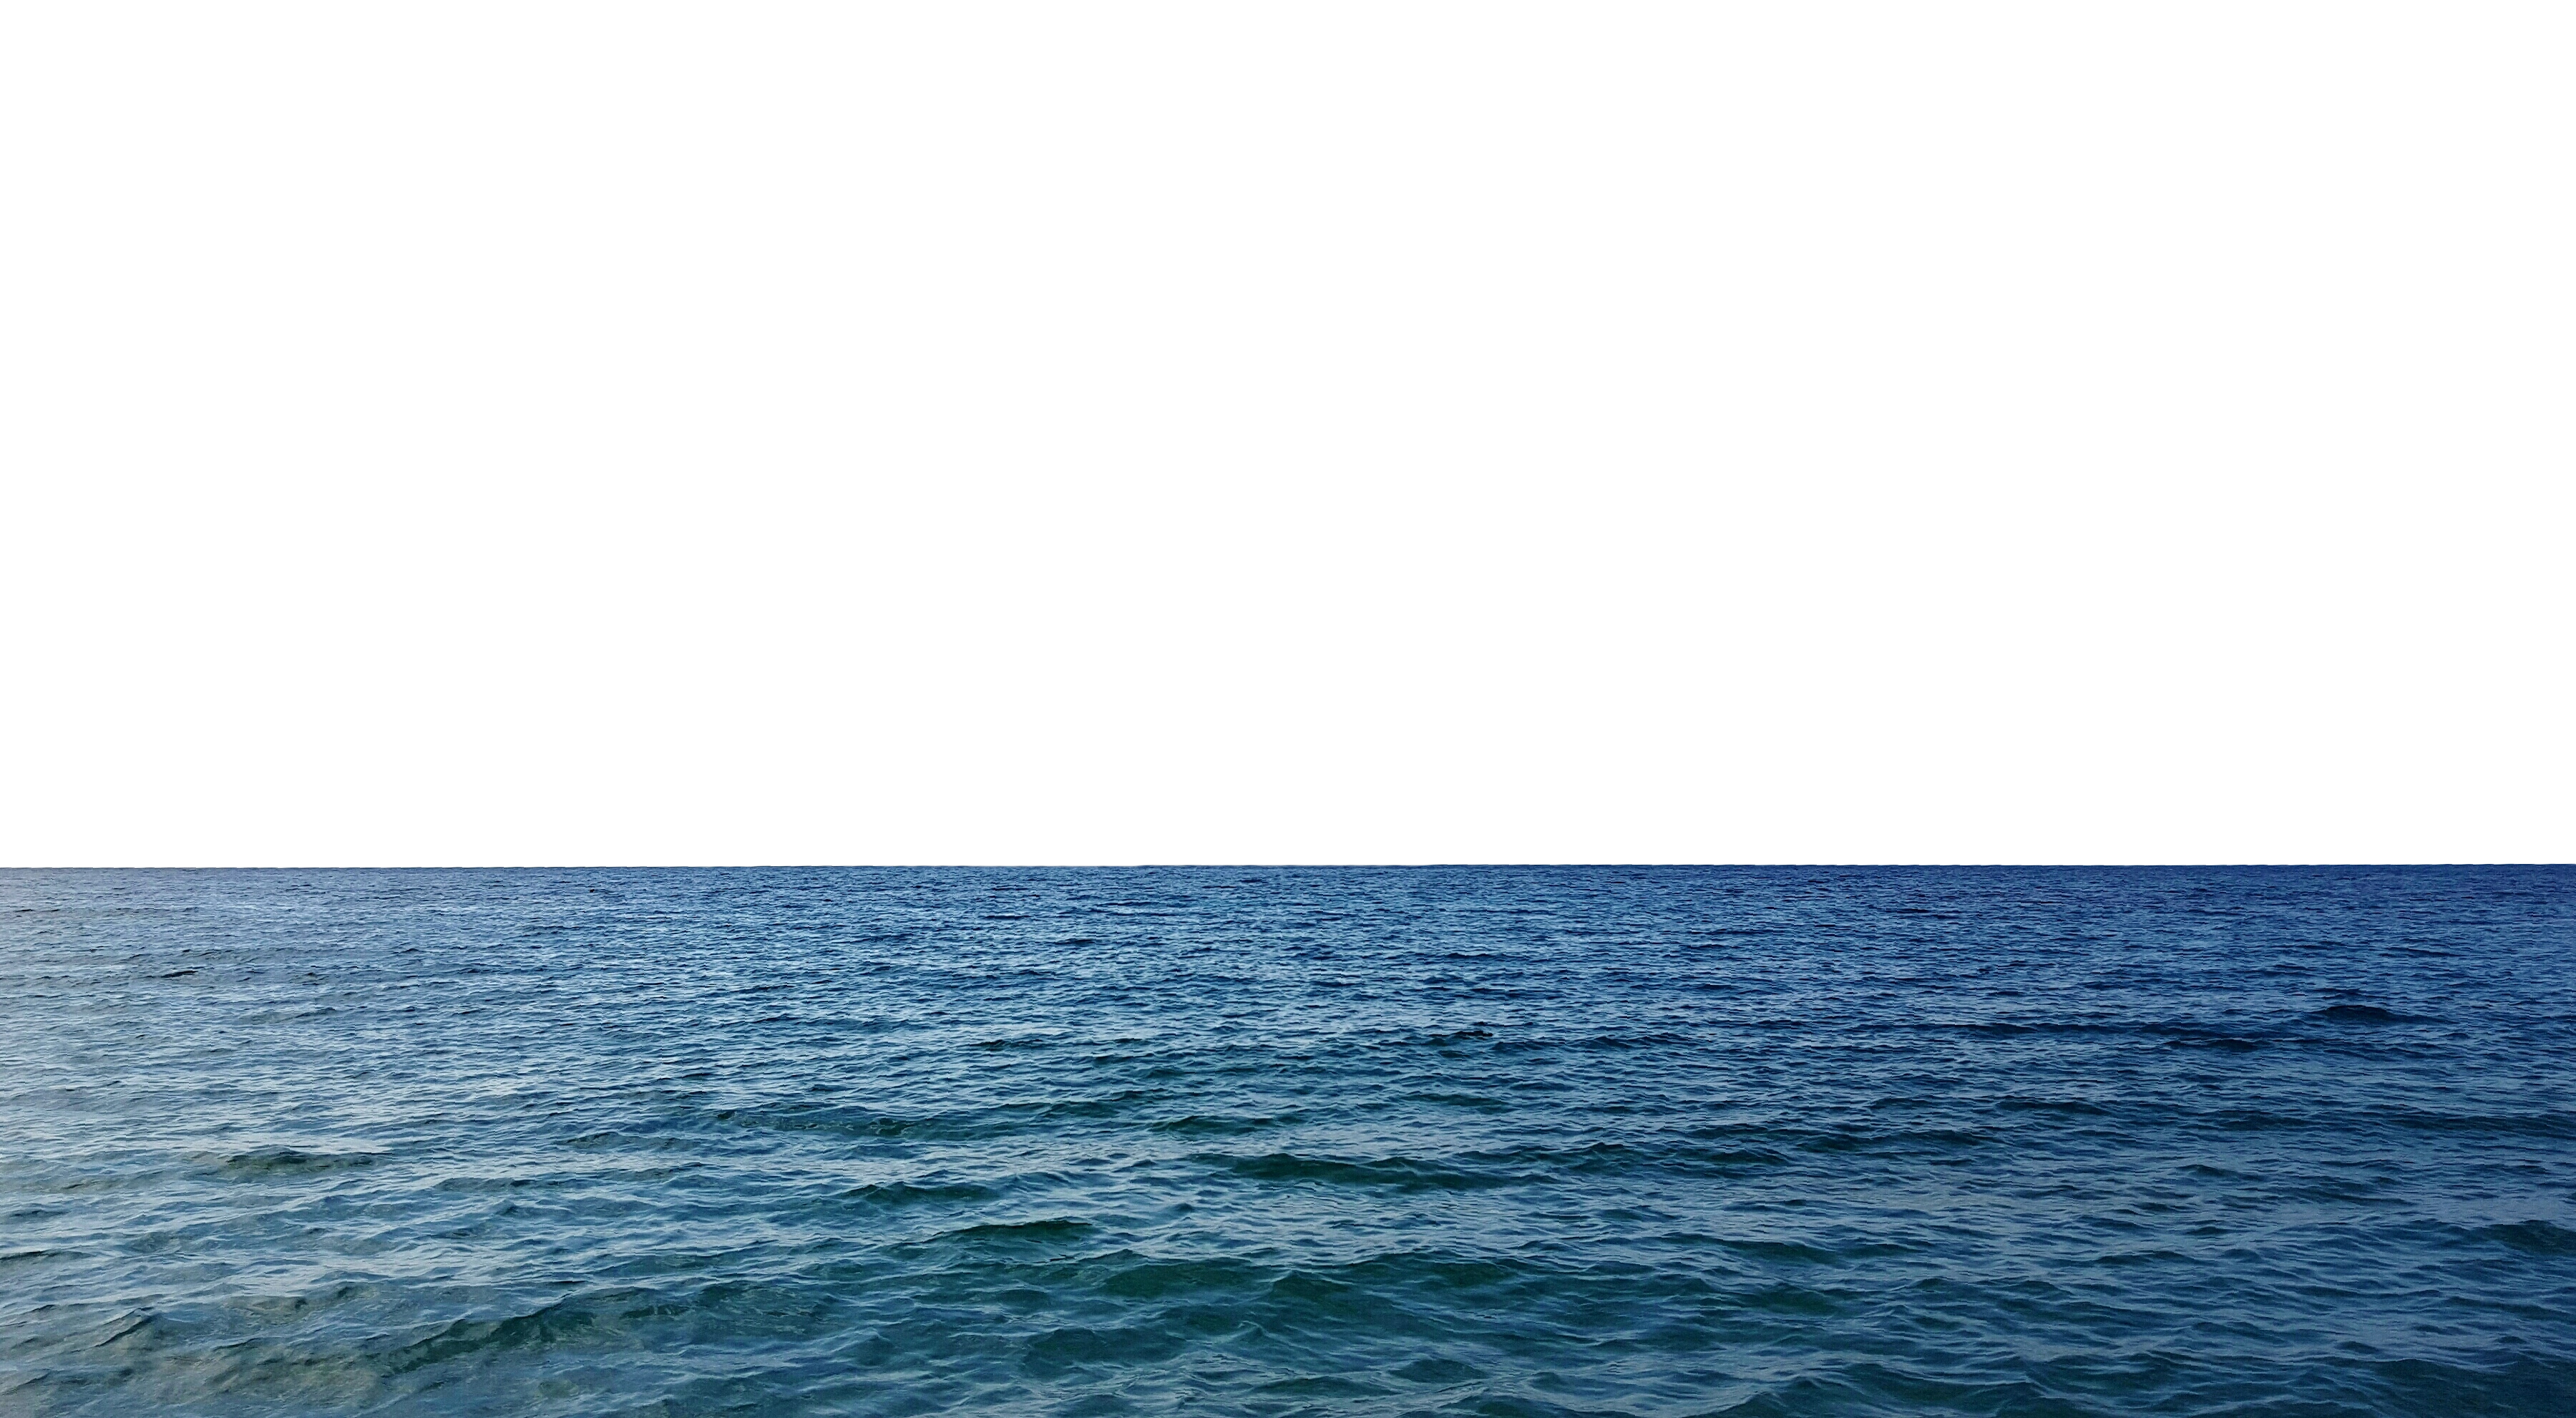 Sea PNG Image - PurePNG | Free transparent CC0 PNG Image ...